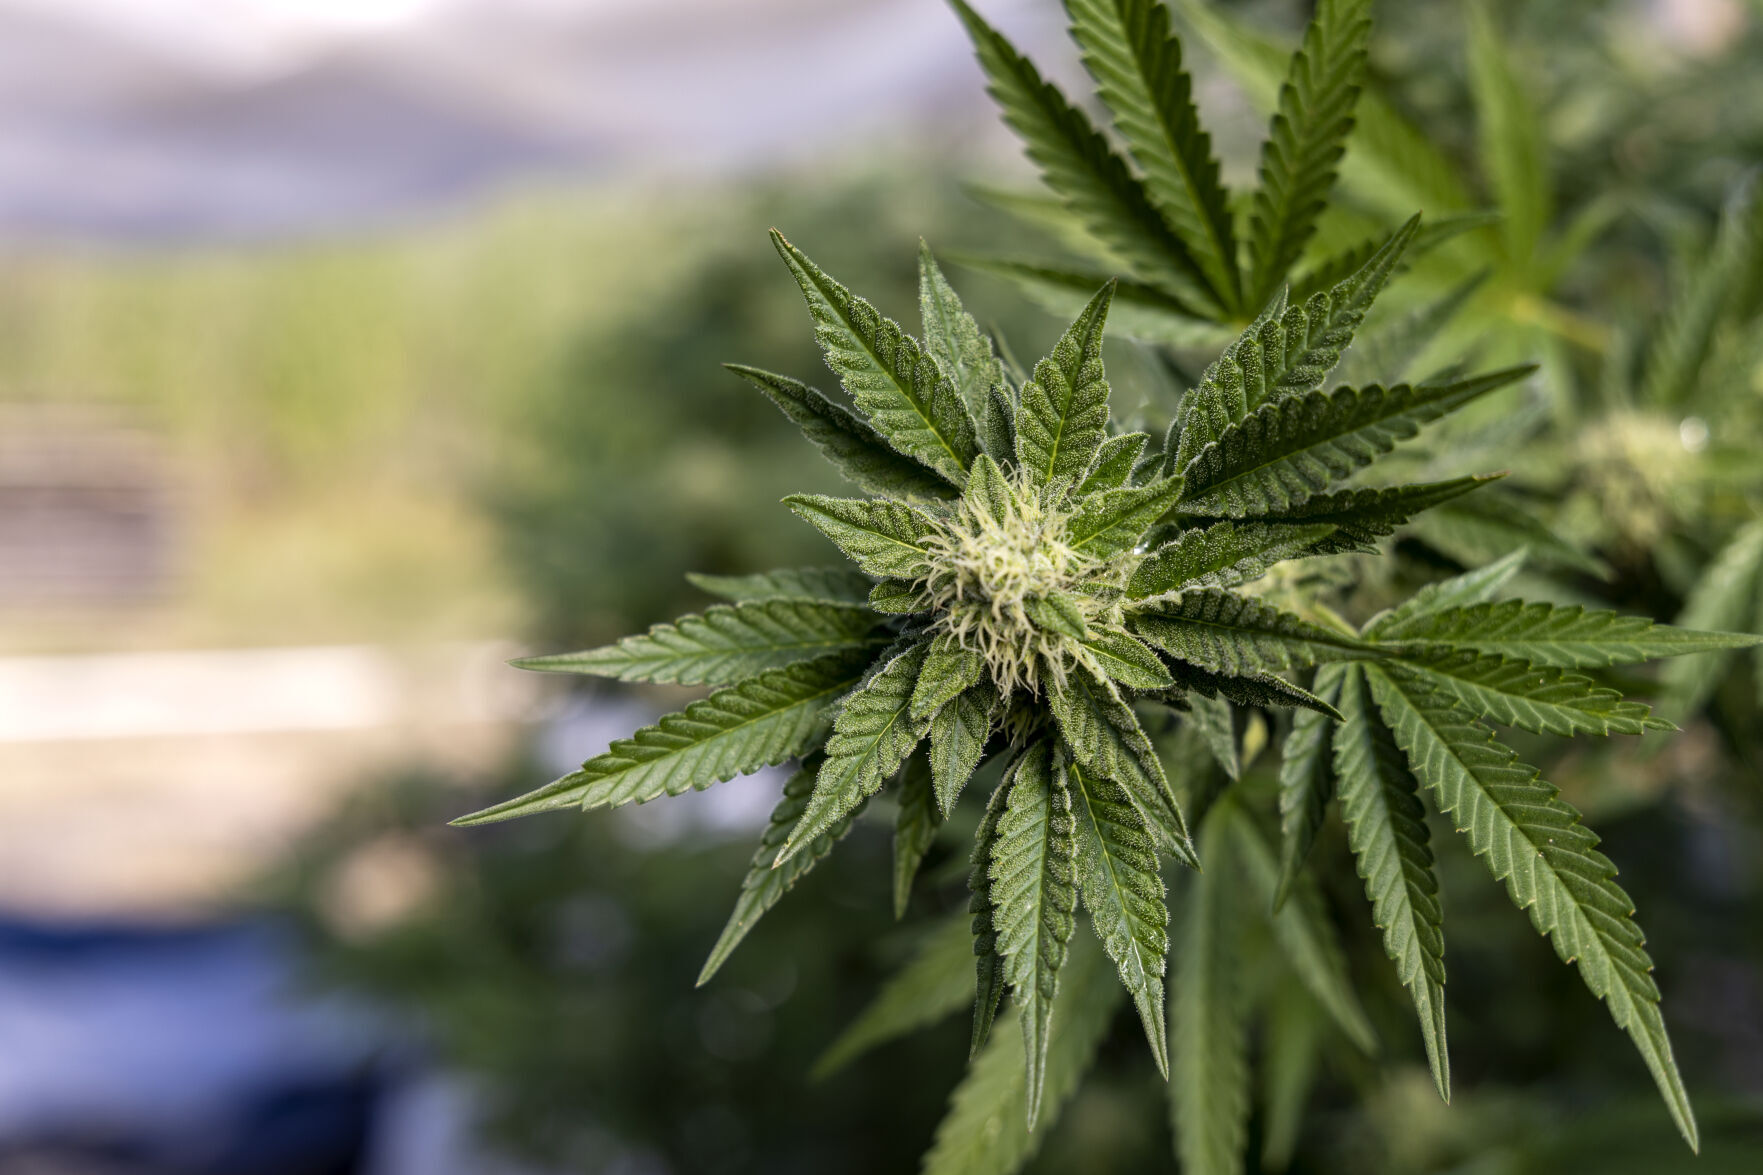 Autoflower cannabis strain seeds - Is it legal to order weed feminized strain seeds online